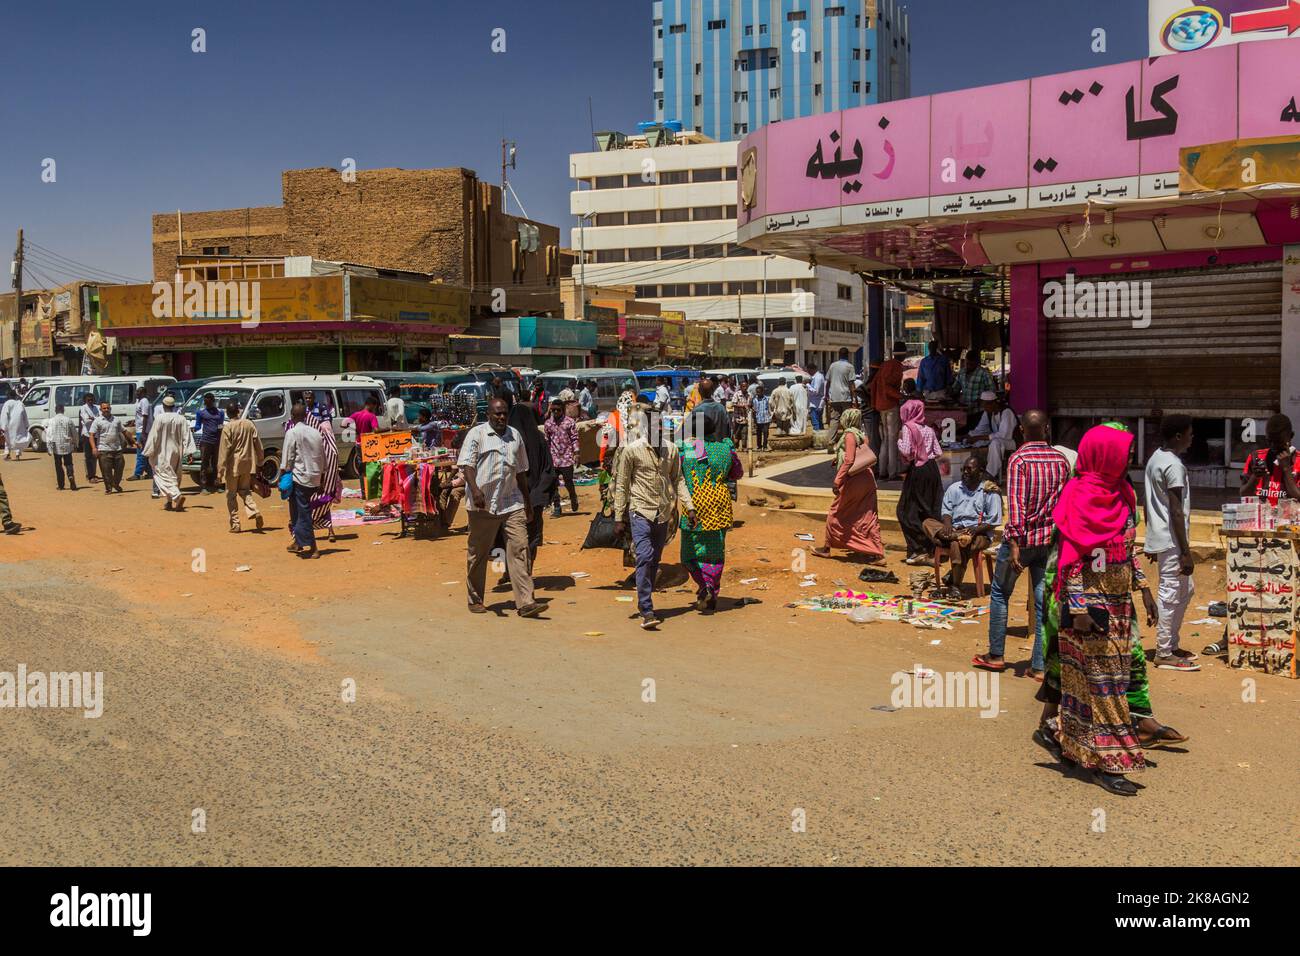 KHARTOUM, SUDAN - MARCH 8, 2019: People on a street in Khartoum, capital of Sudan Stock Photo